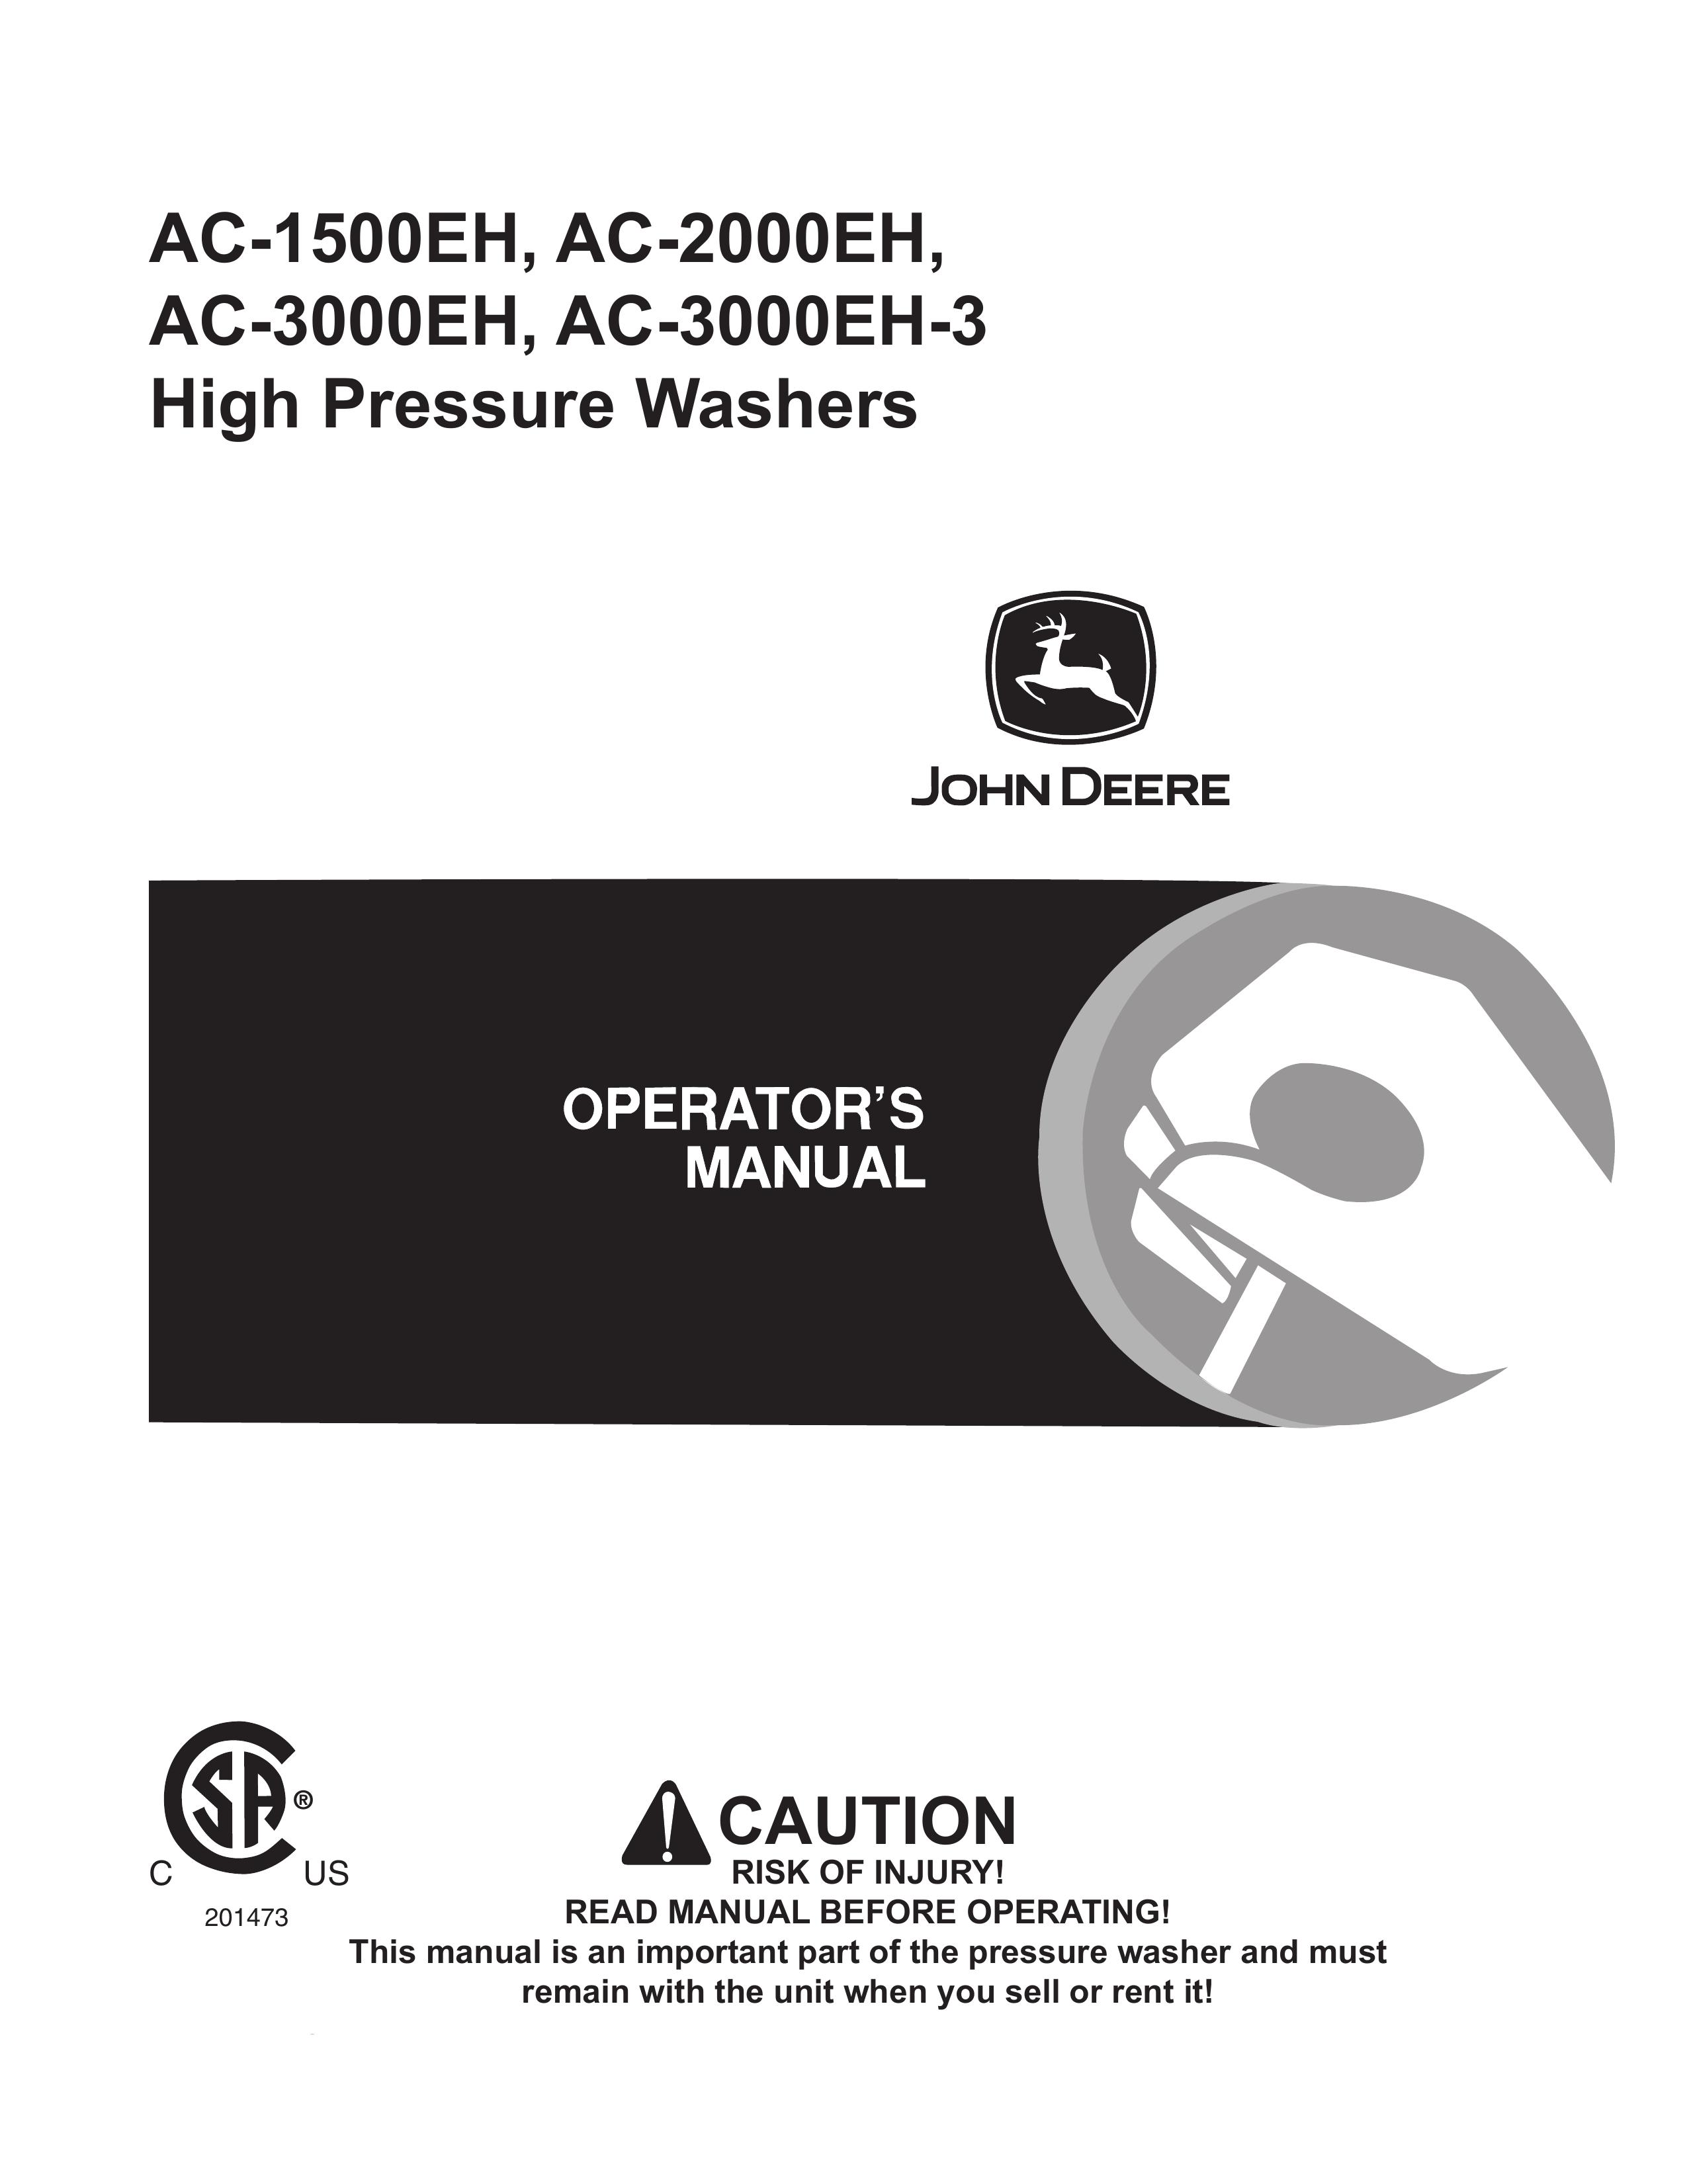 John Deere AC-2000EH Washer User Manual